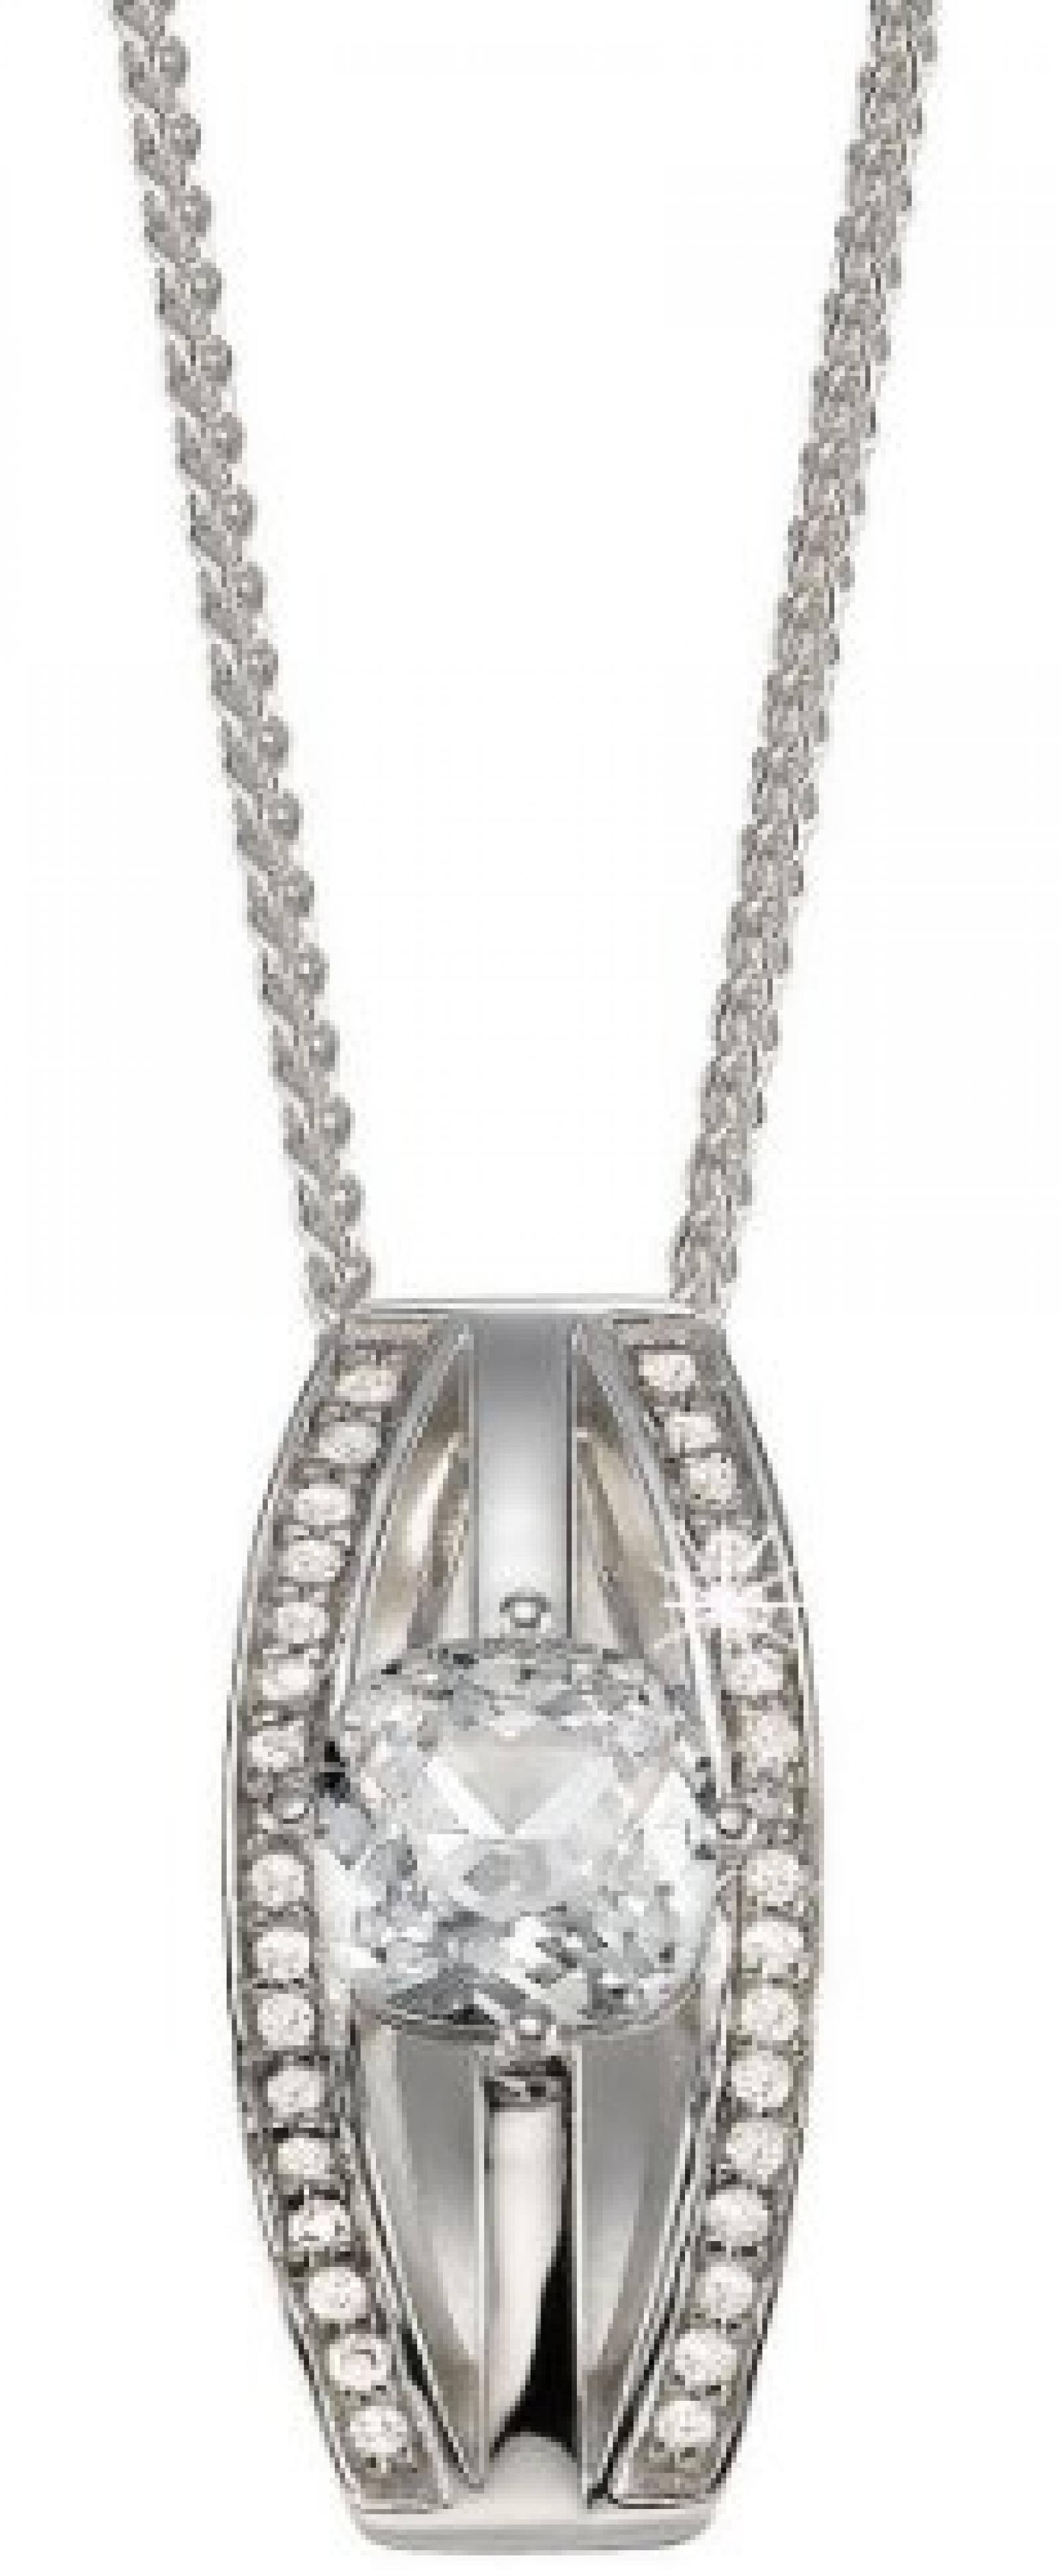 Pierre Cardin Damen Halskette 925 Sterling Silber rhodiniert Kristall Zirkonia Extase 42 cm weiß PCNL90403A420 